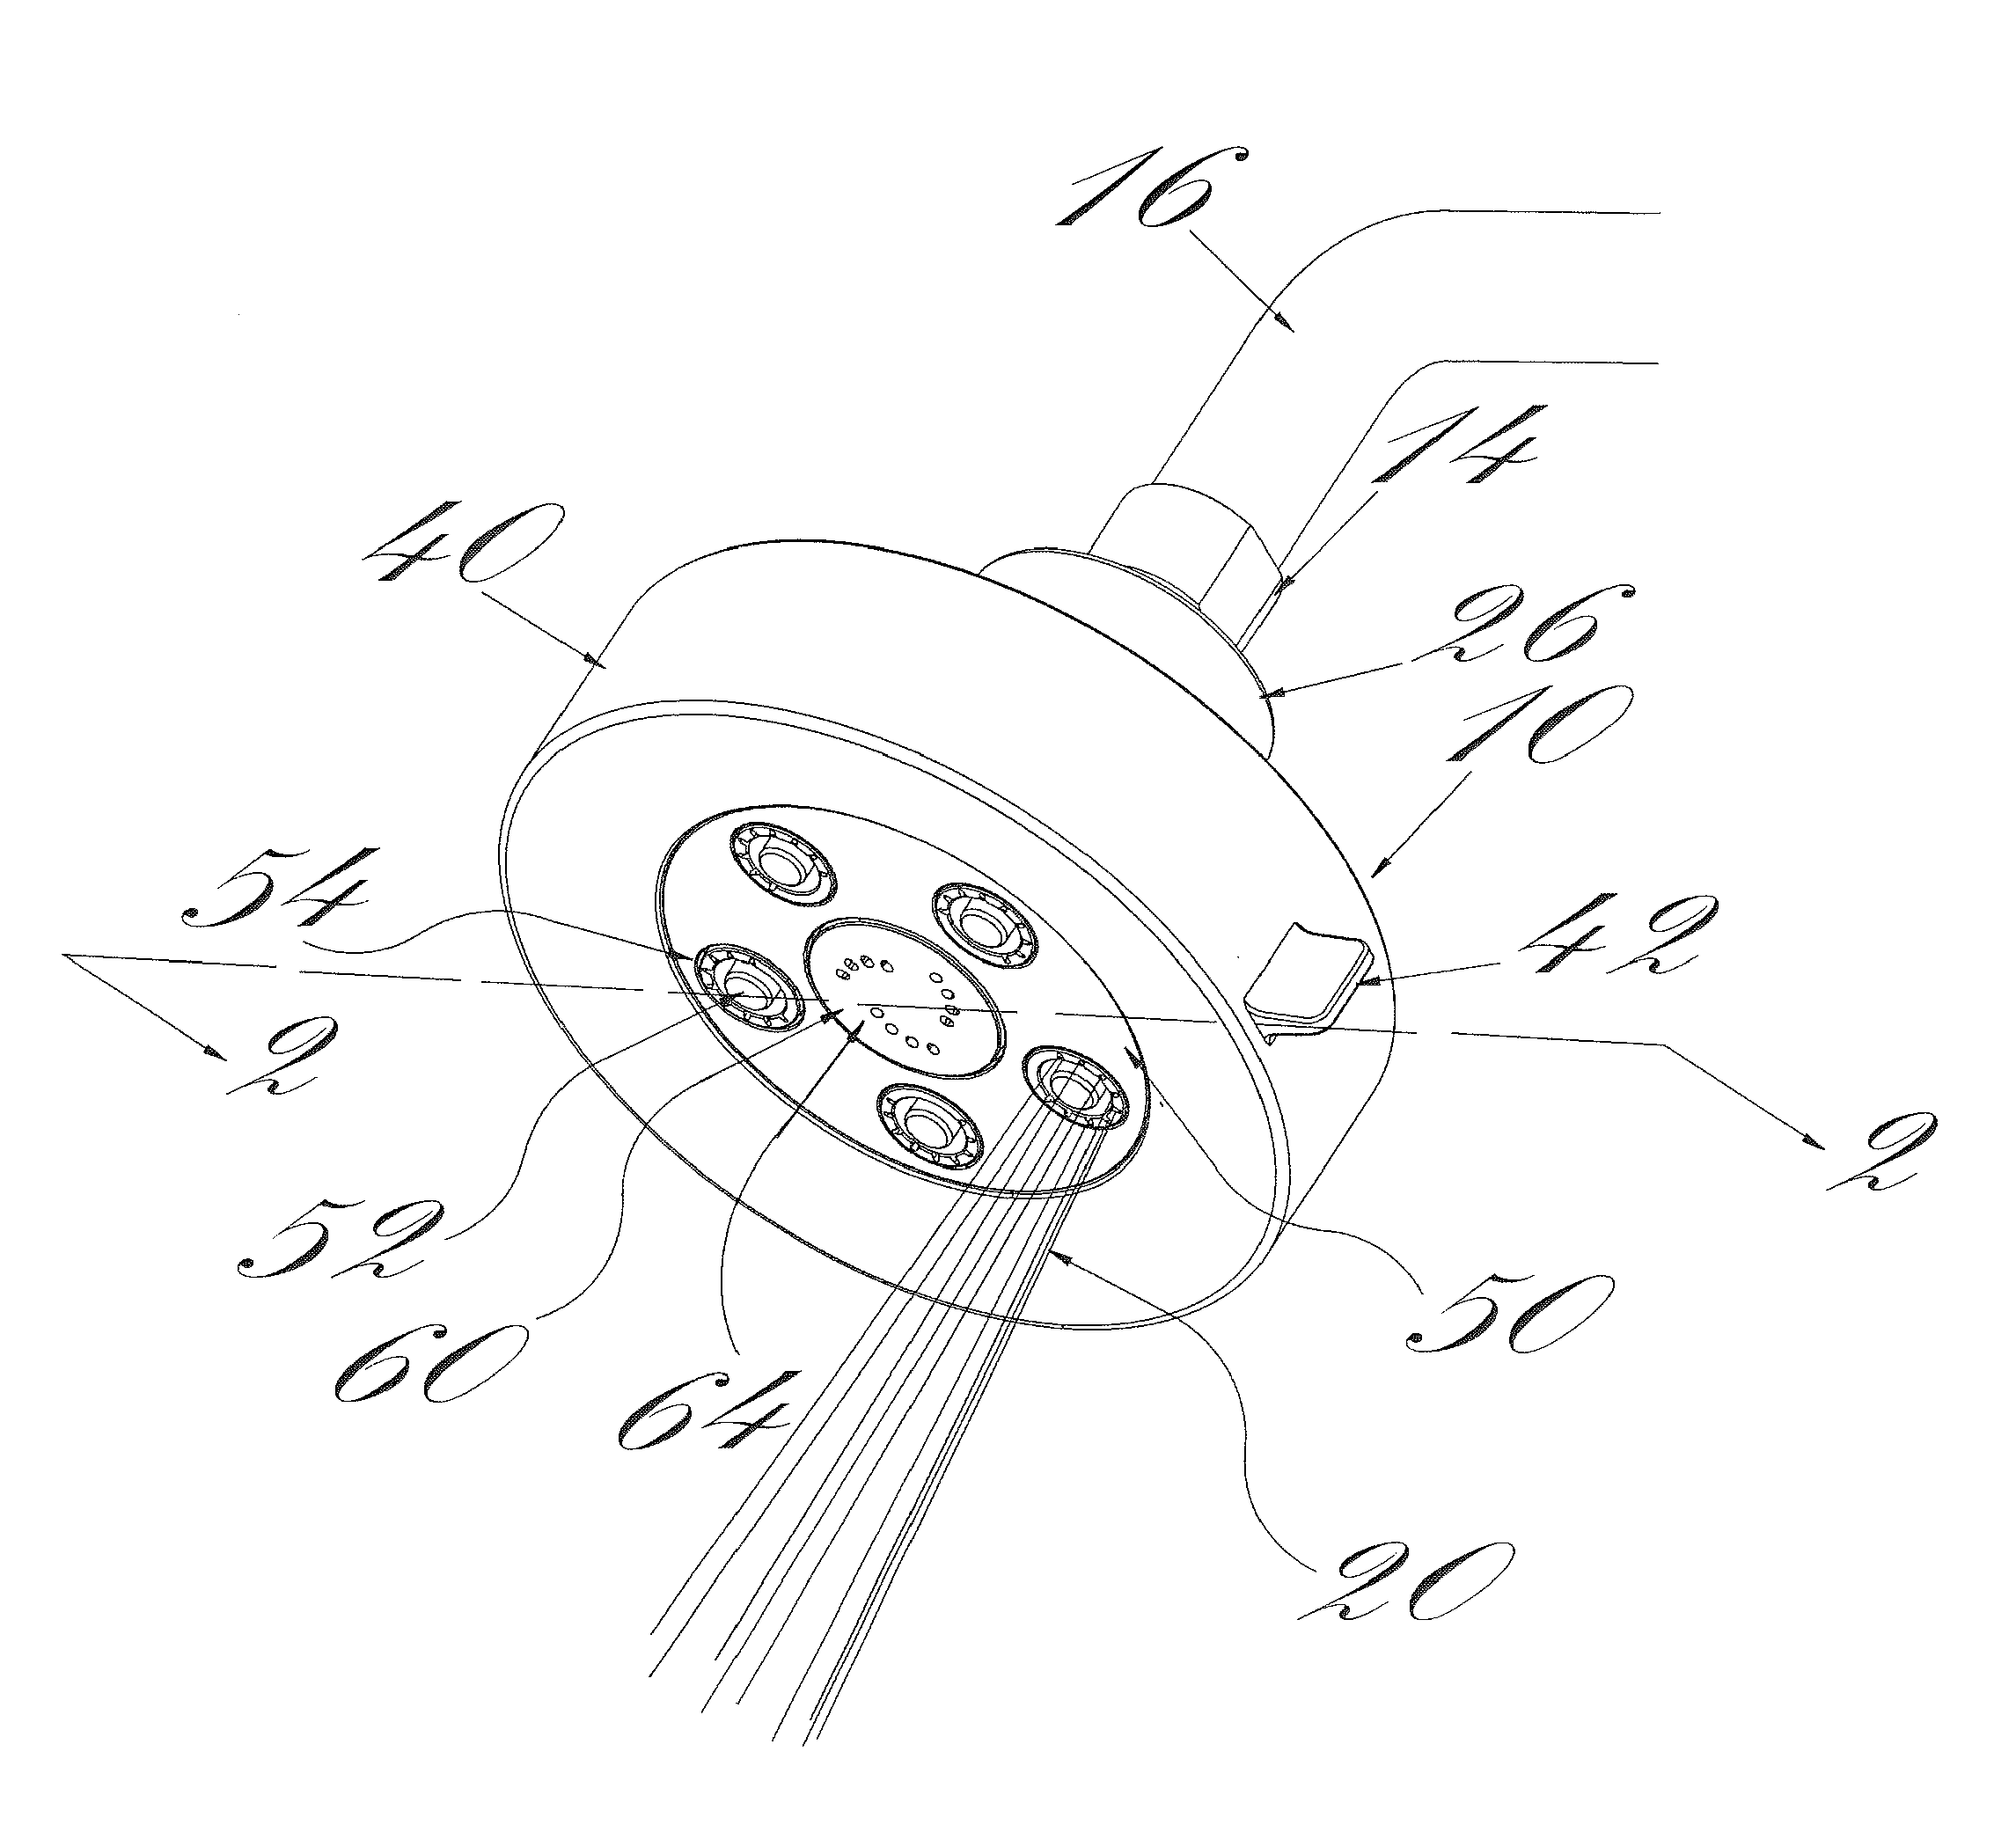 Showerhead with 360 degree rotational spray control